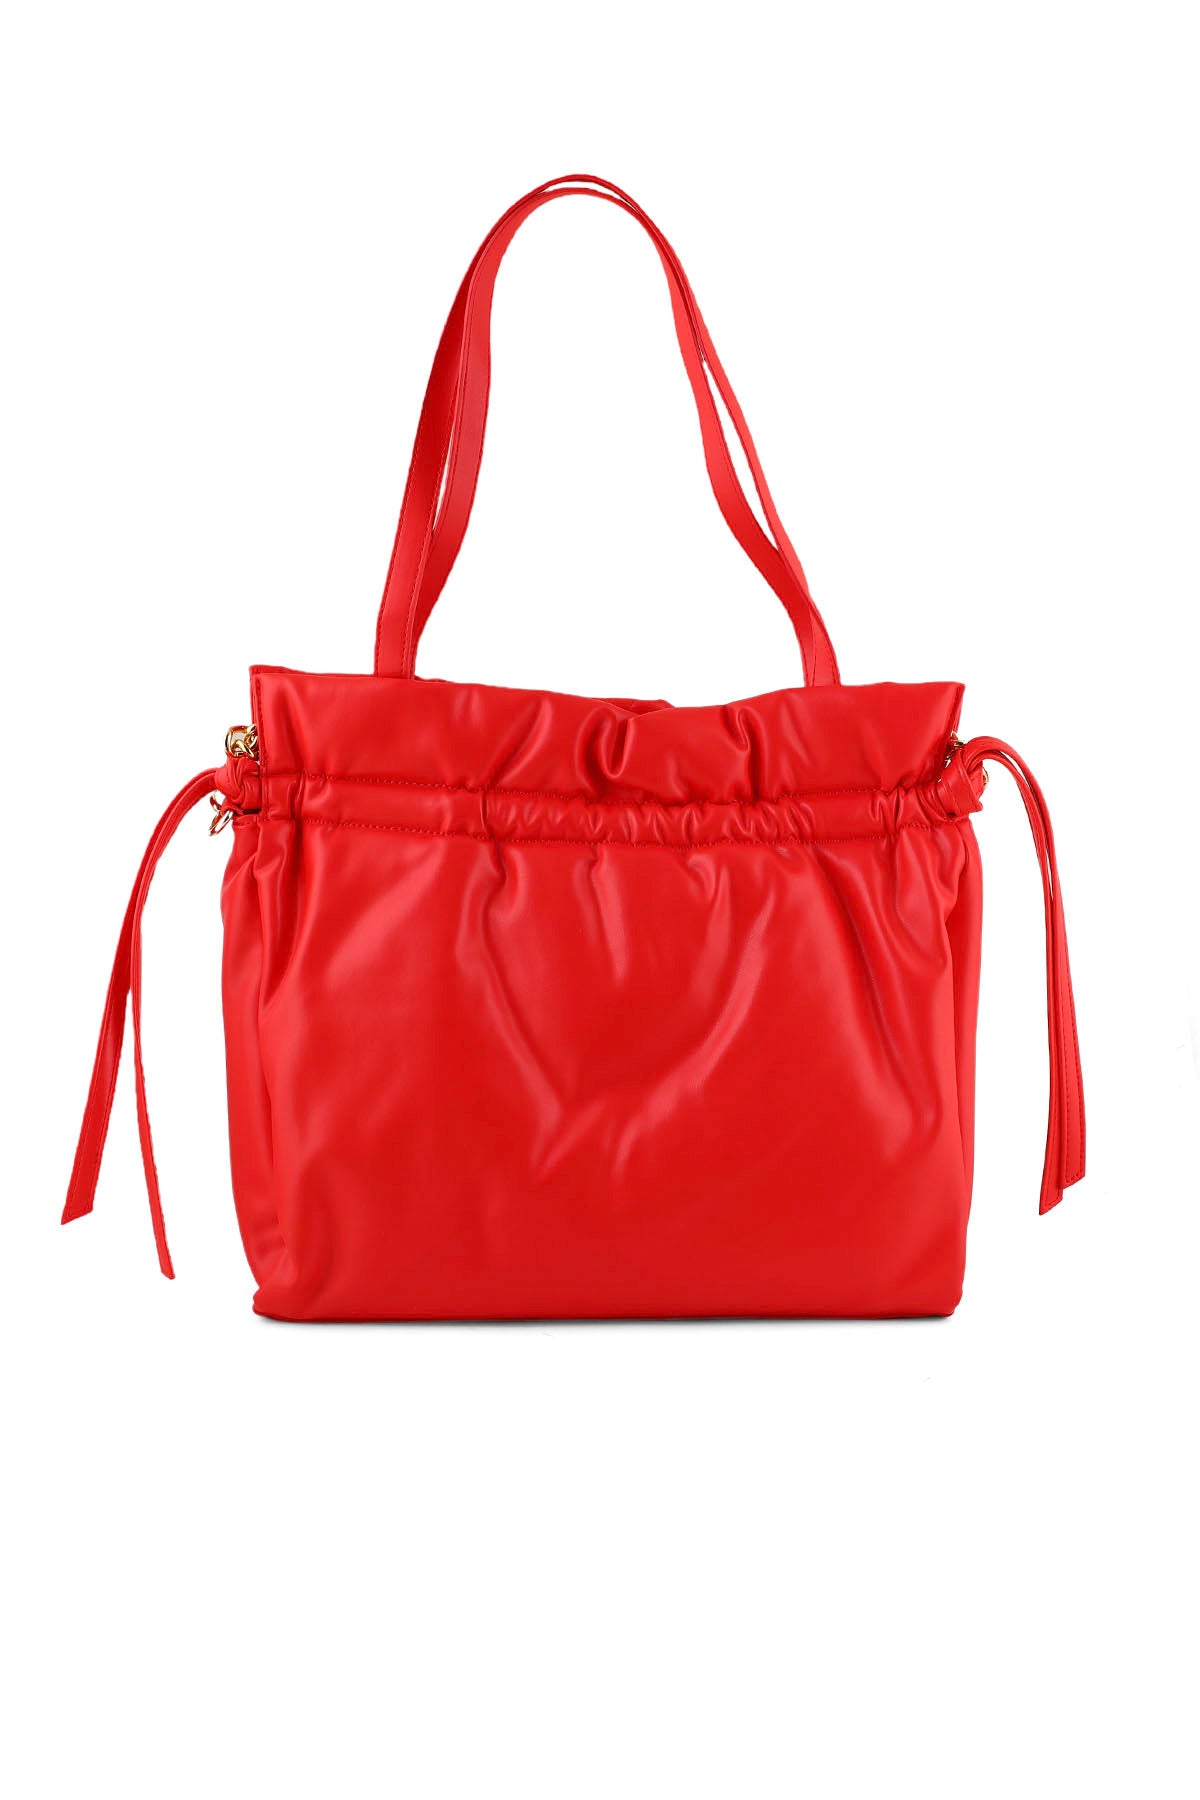 Bucket Hand Bags B15007-Red – Insignia PK